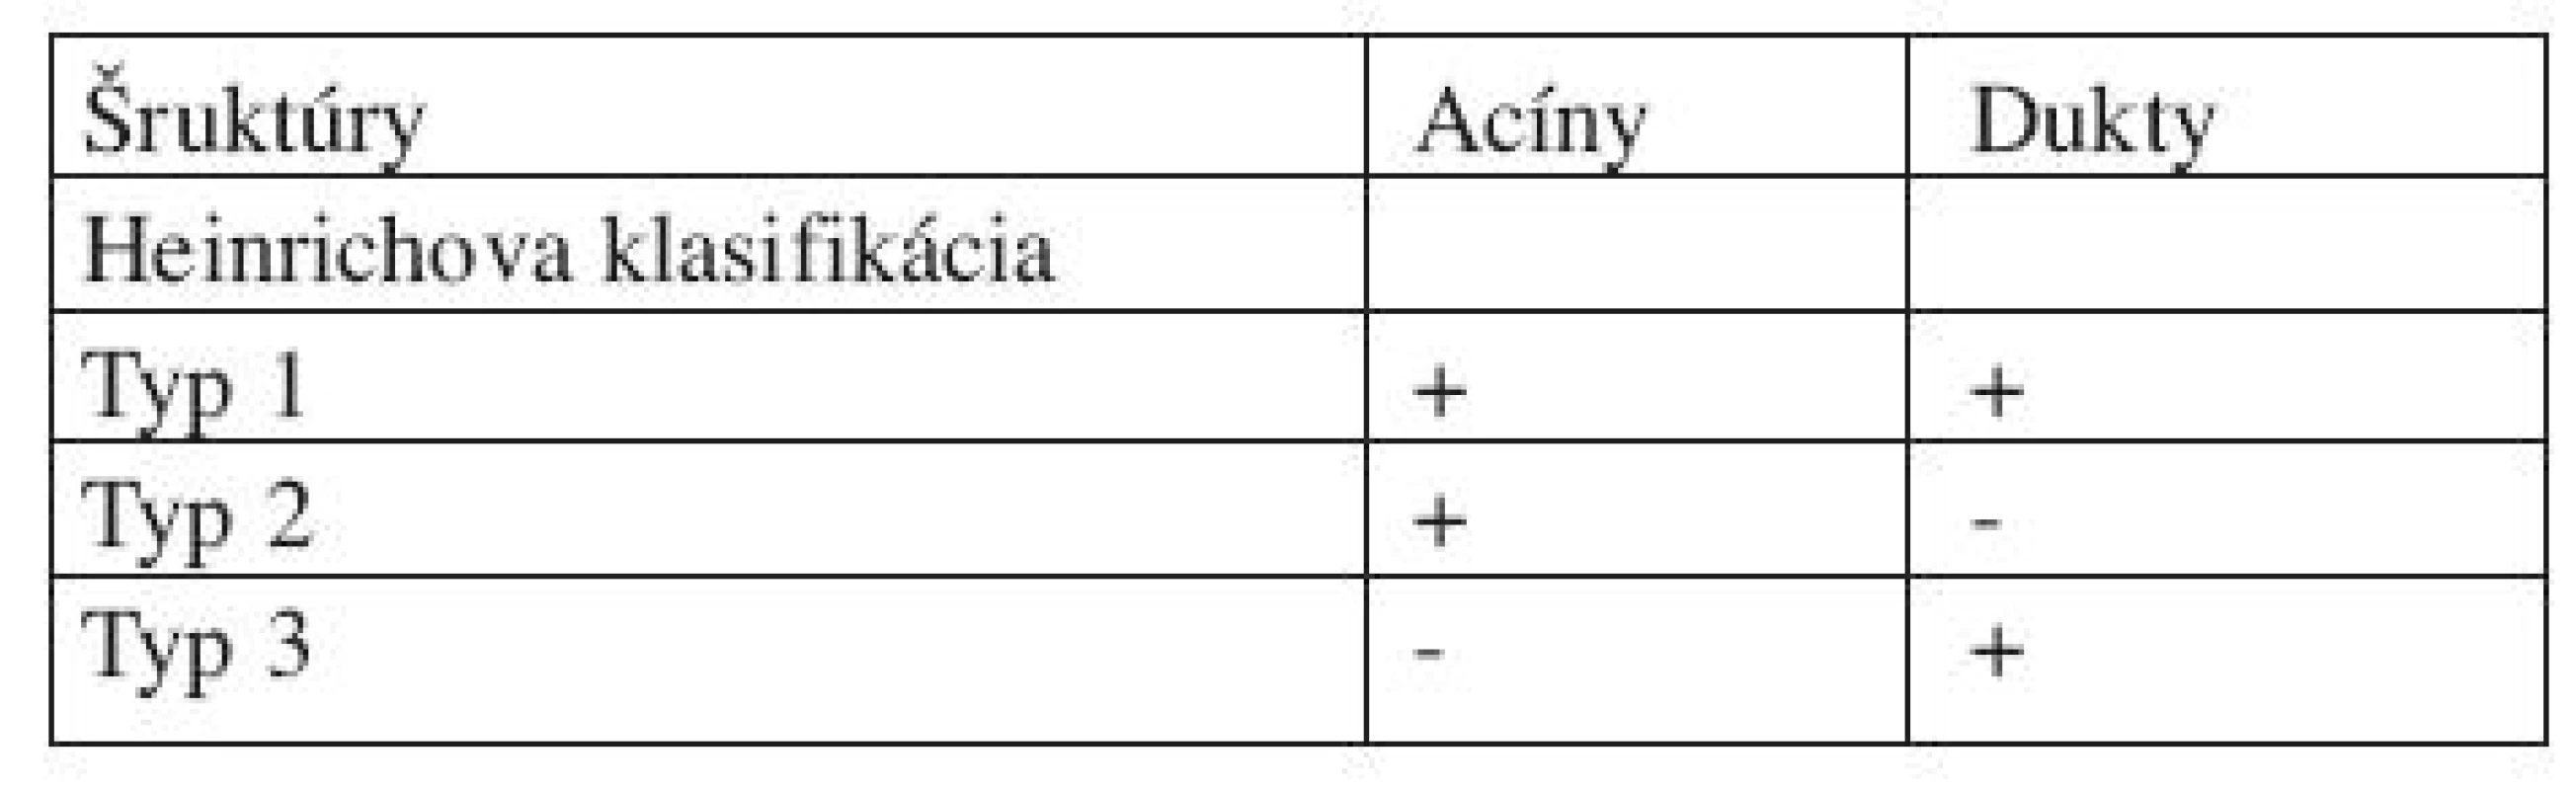 1. Heinrichova klasifikácia histologickej štruktúry heterotopického pankreasu [4]
Tab. 1. Heinrich classification of heterotopic pancreas [4]